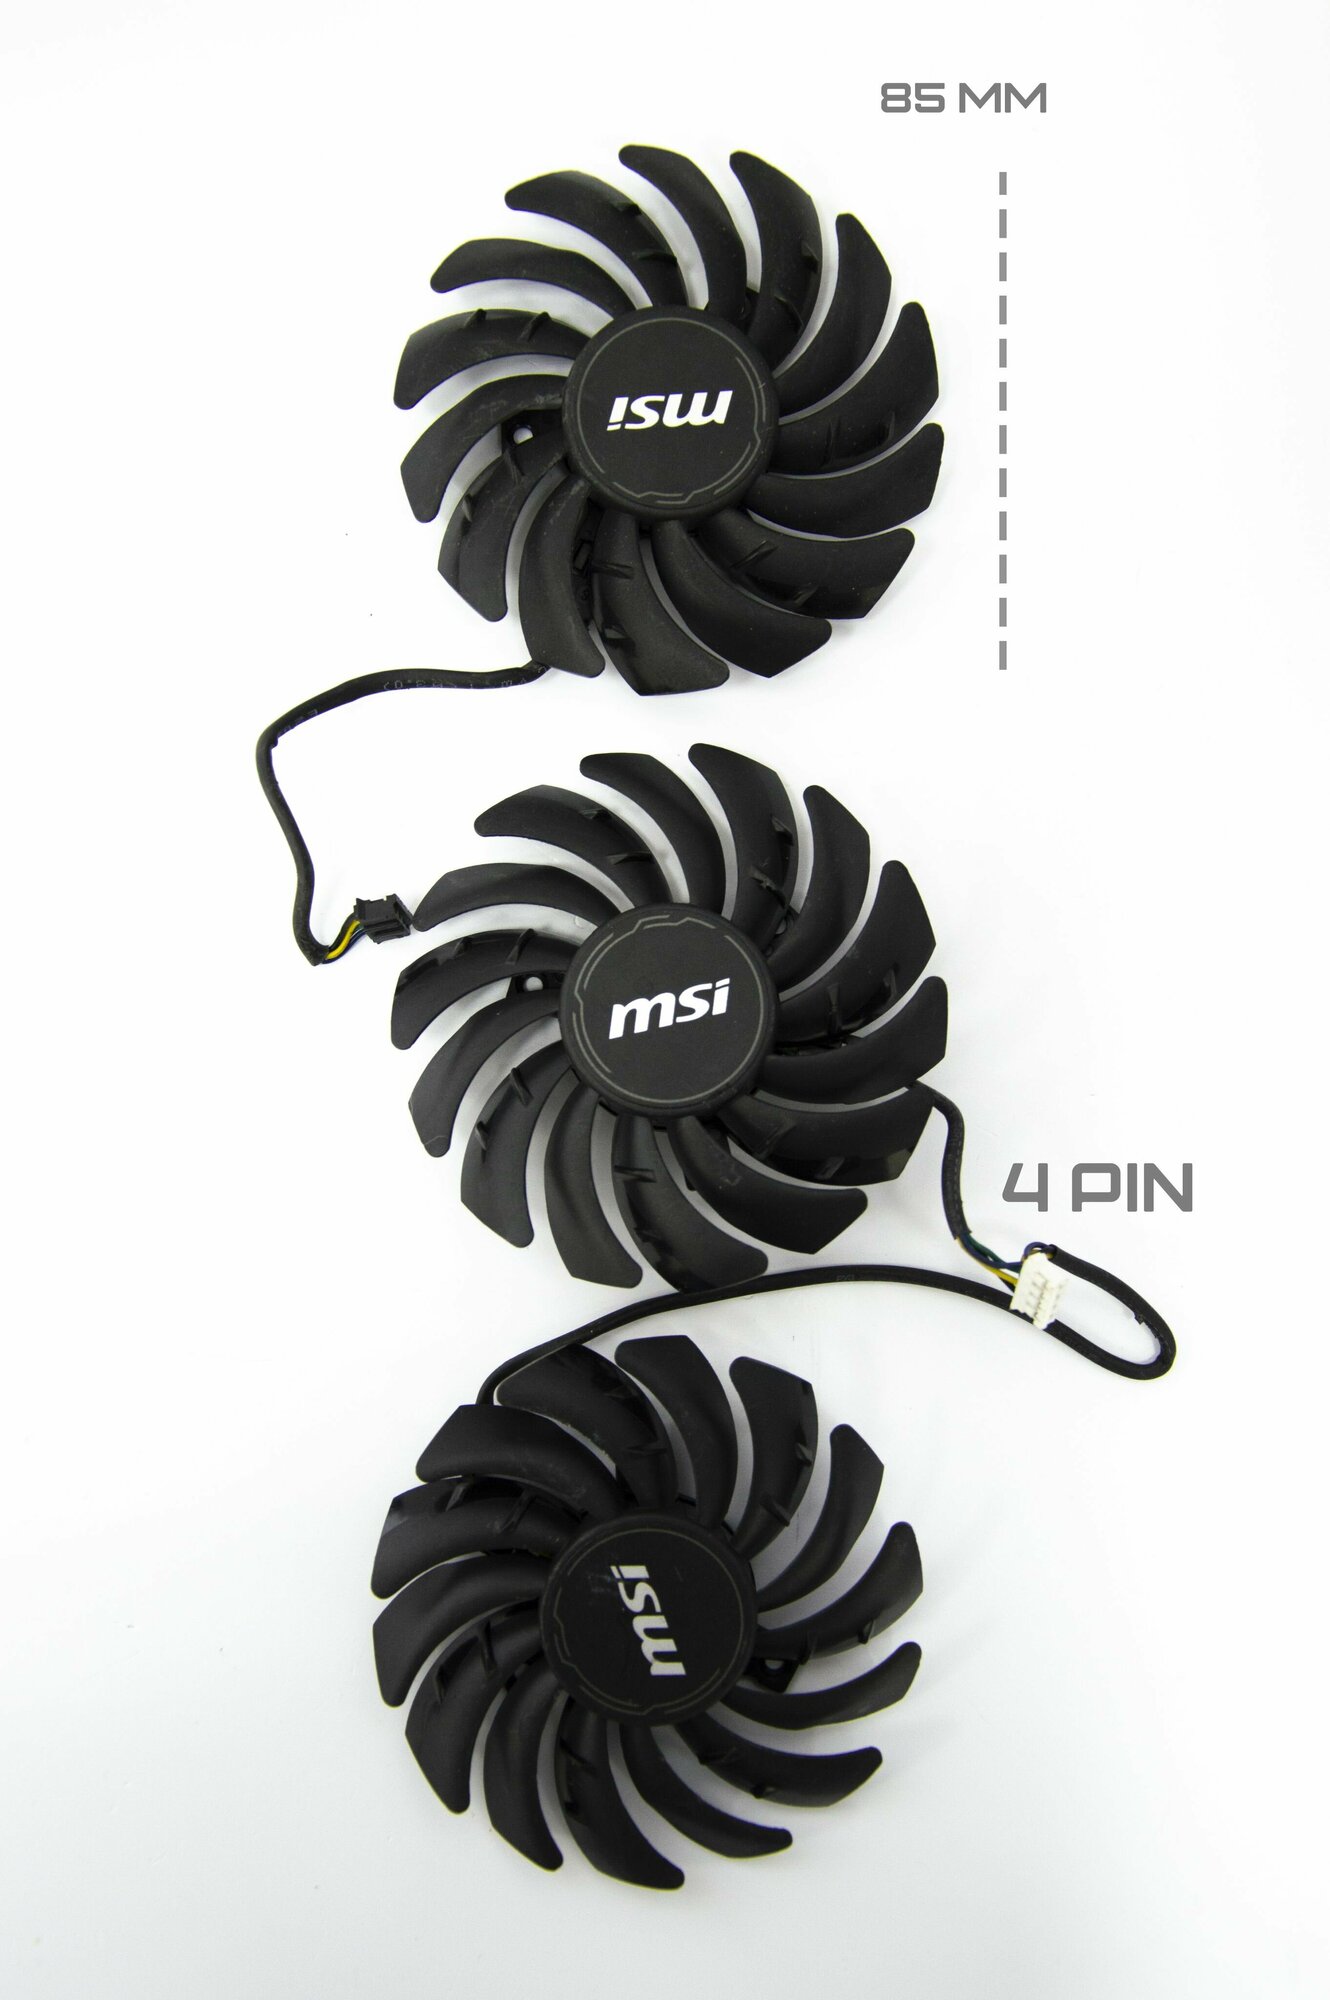 Комплект кулеров для видеокарт MSI (3 вентилятора) 85 мм